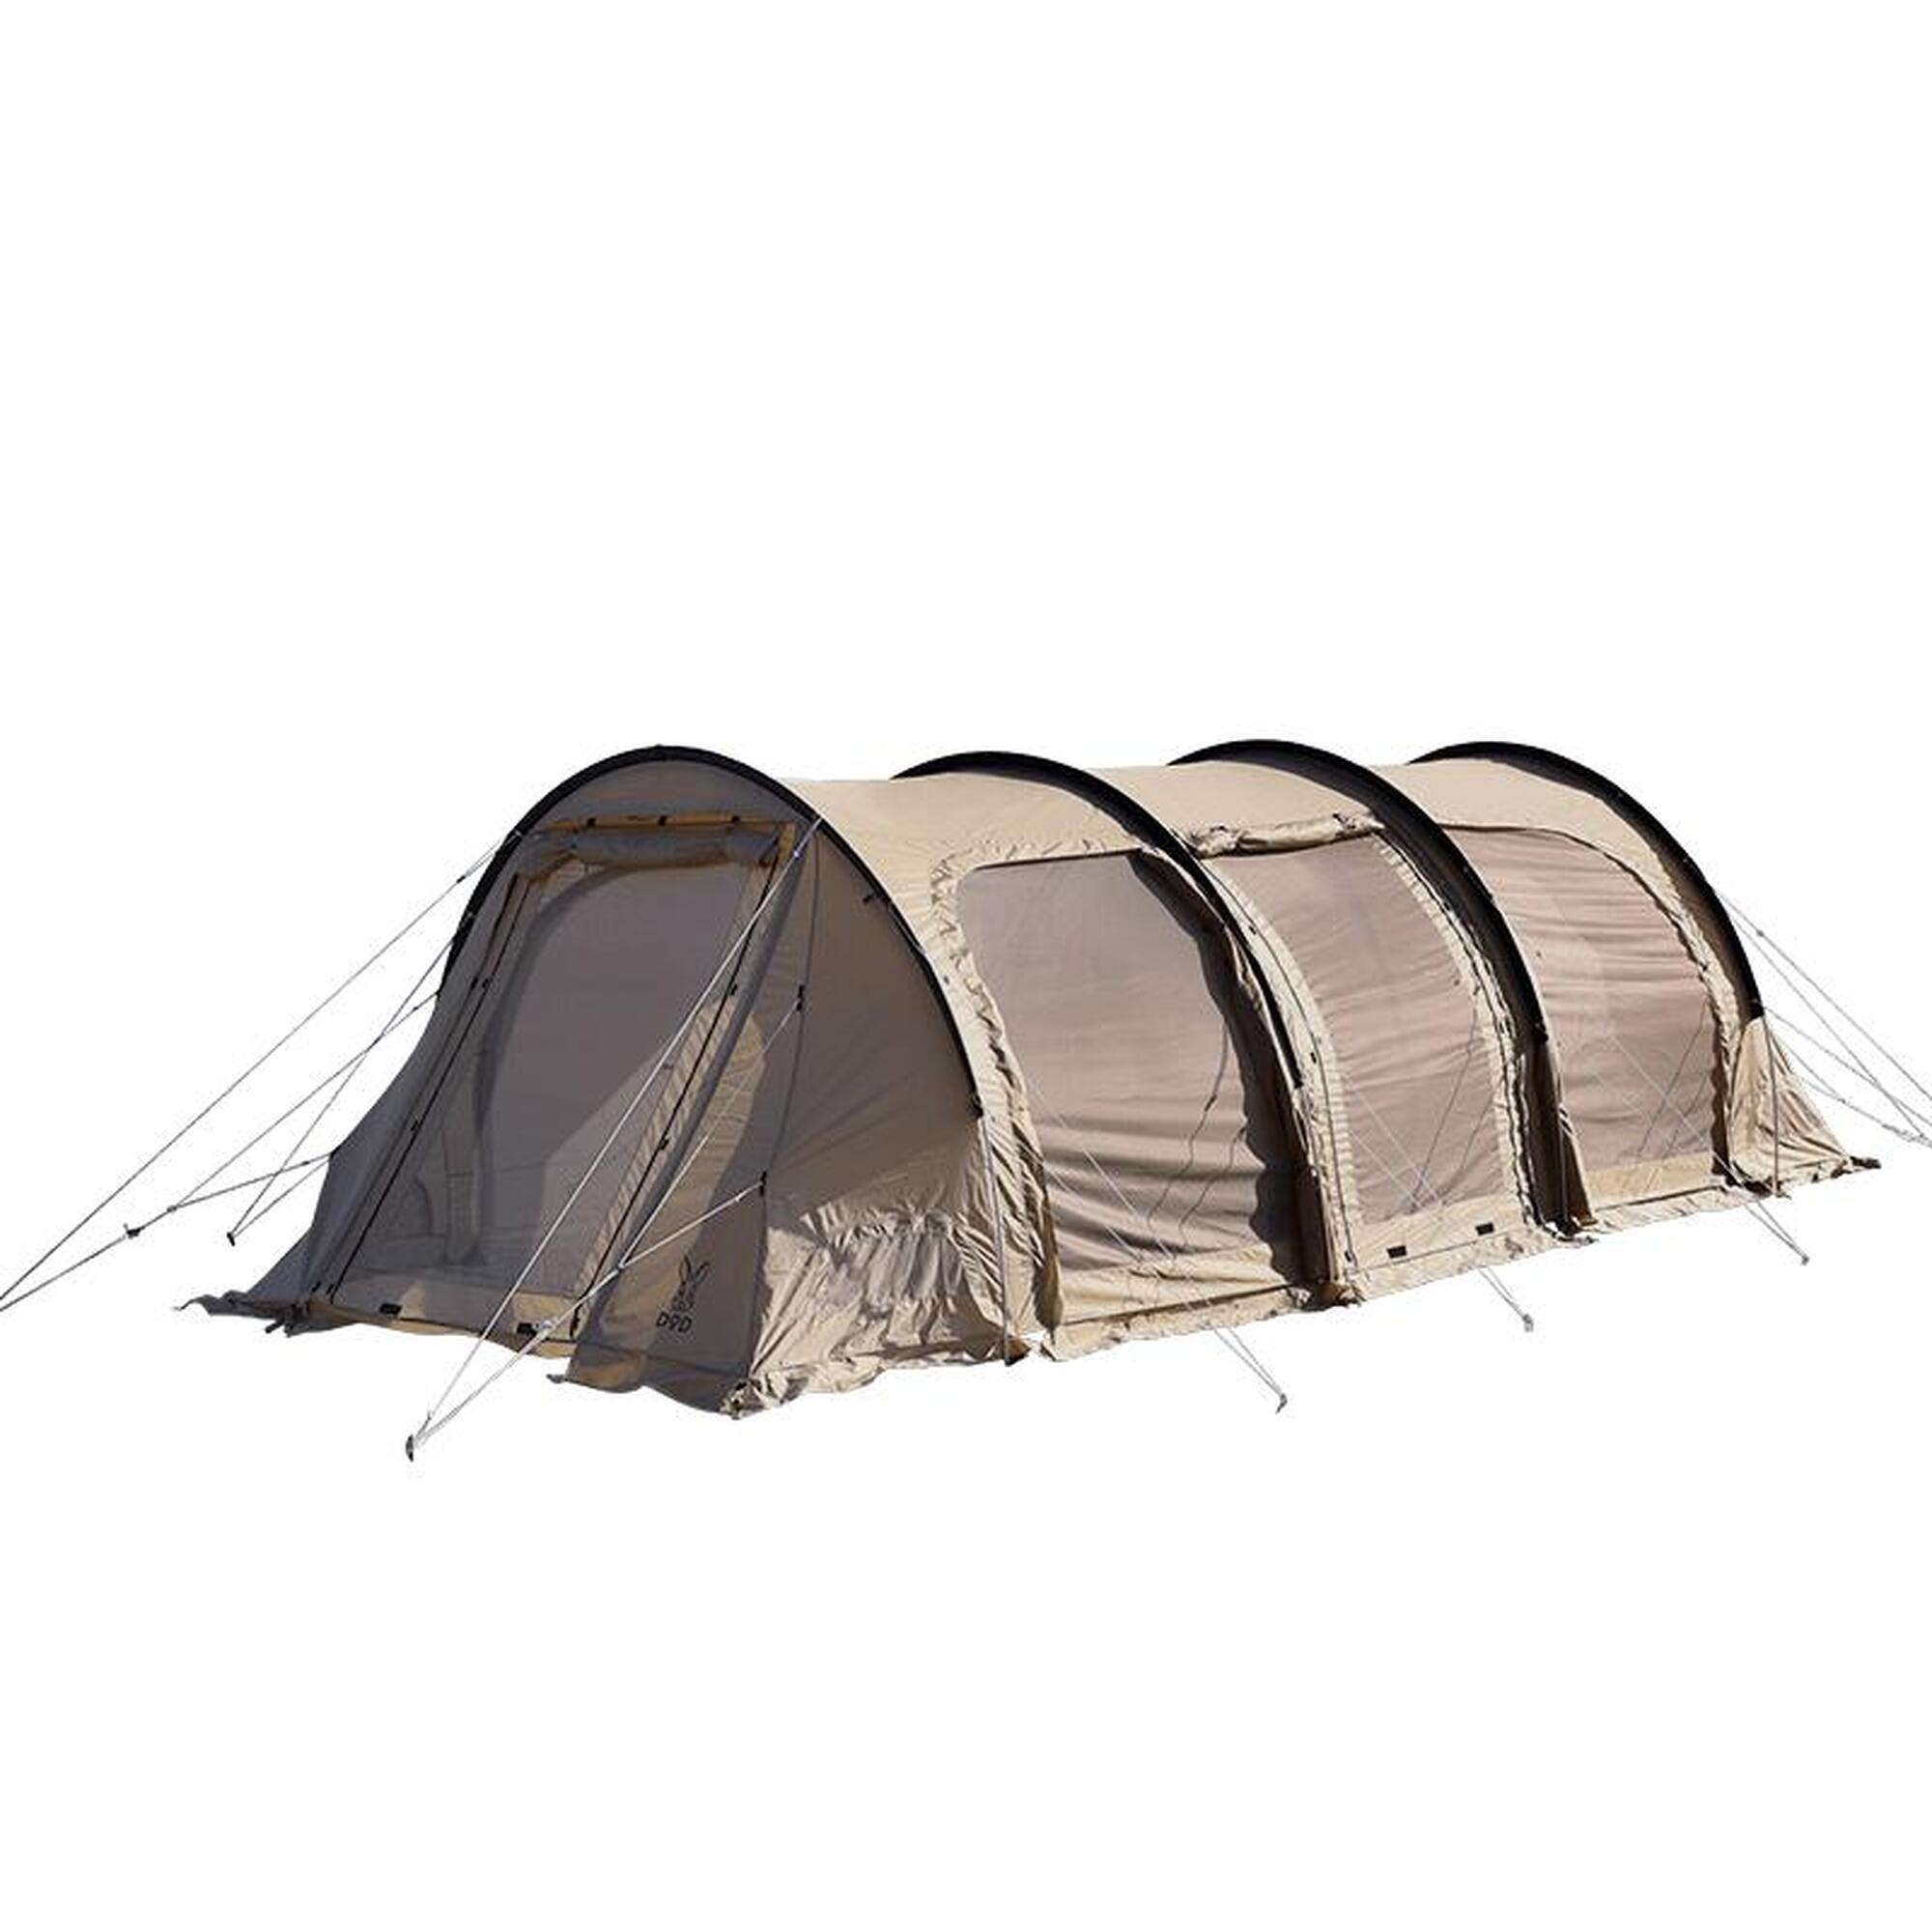 KAMABOKO TENT 3 (M) T5-689-TN 5 Person Camping Tent - Tan